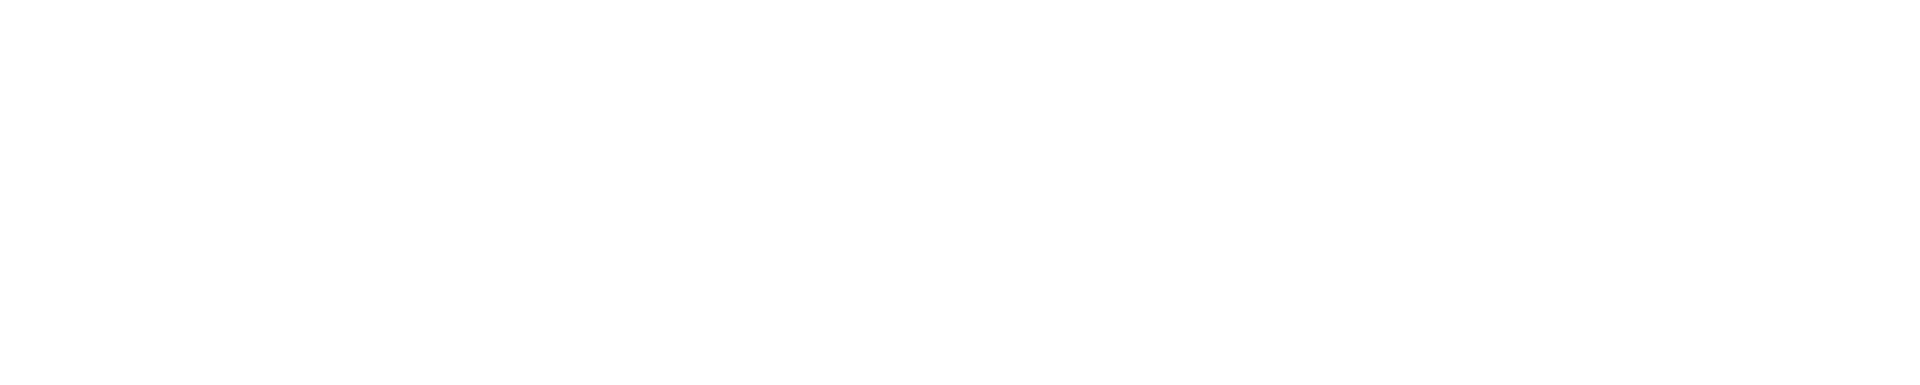 Lundberg Funeral Home Logo